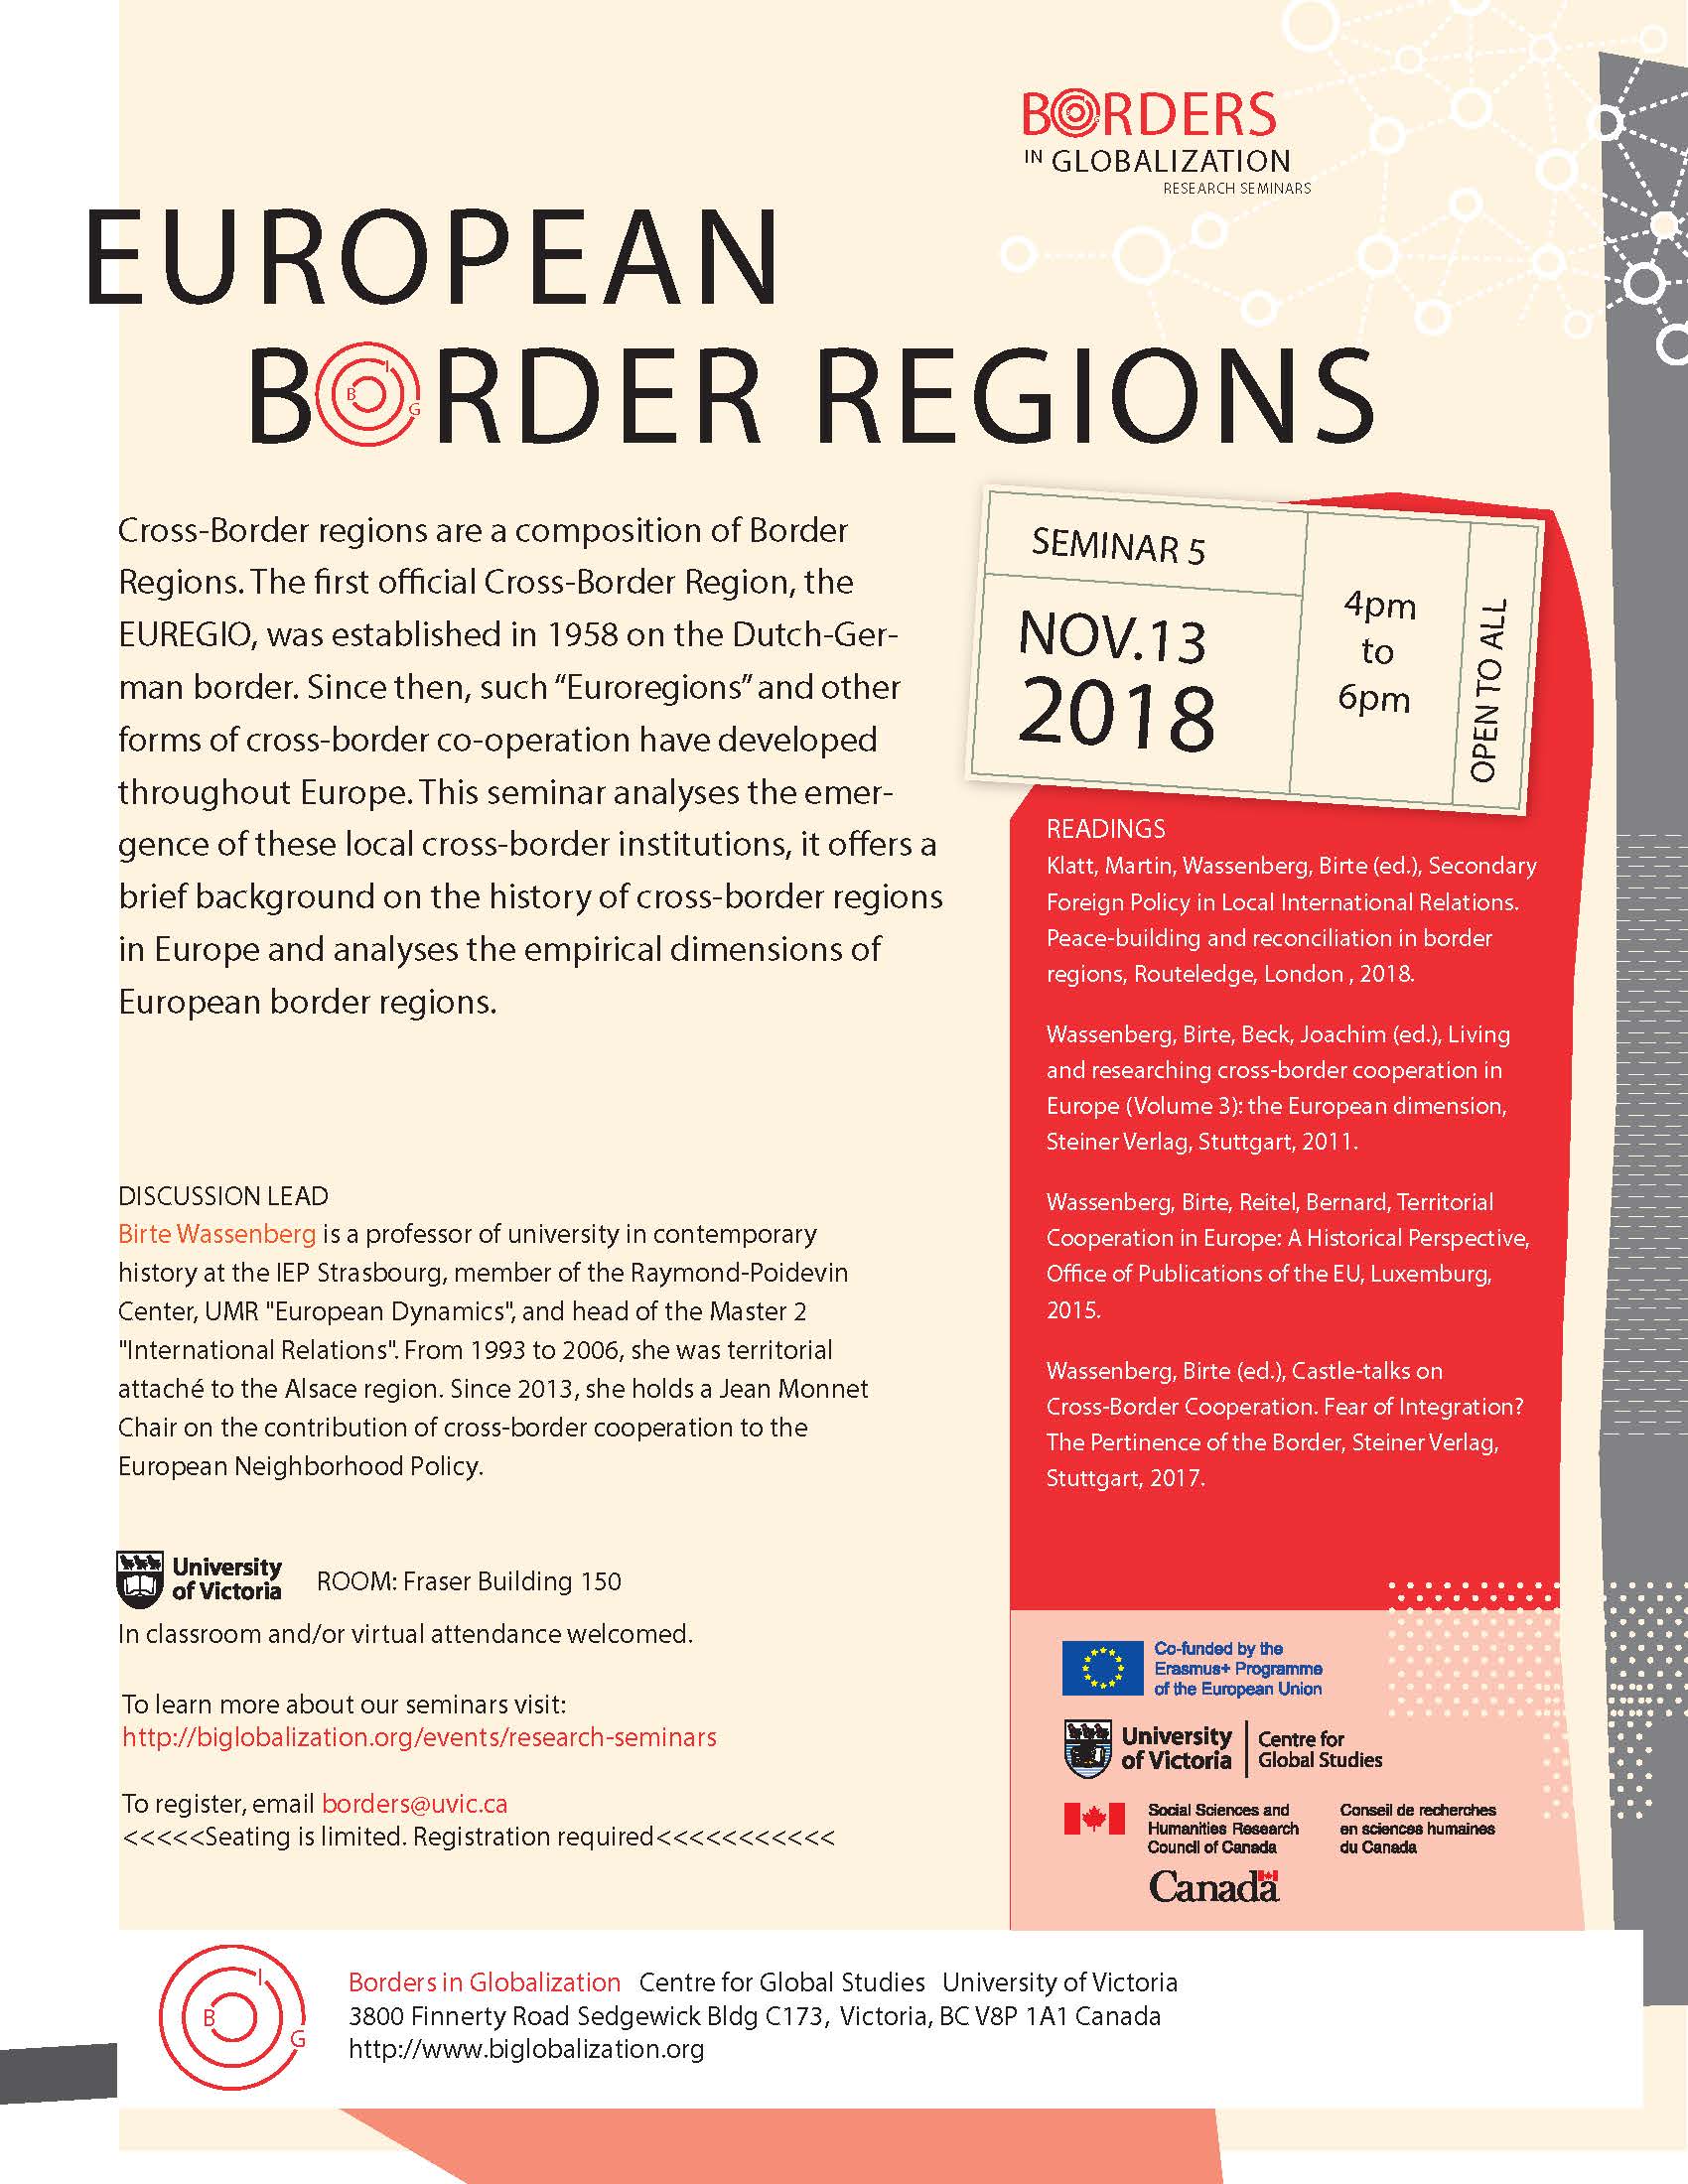 Seminar 5: European Border Regions